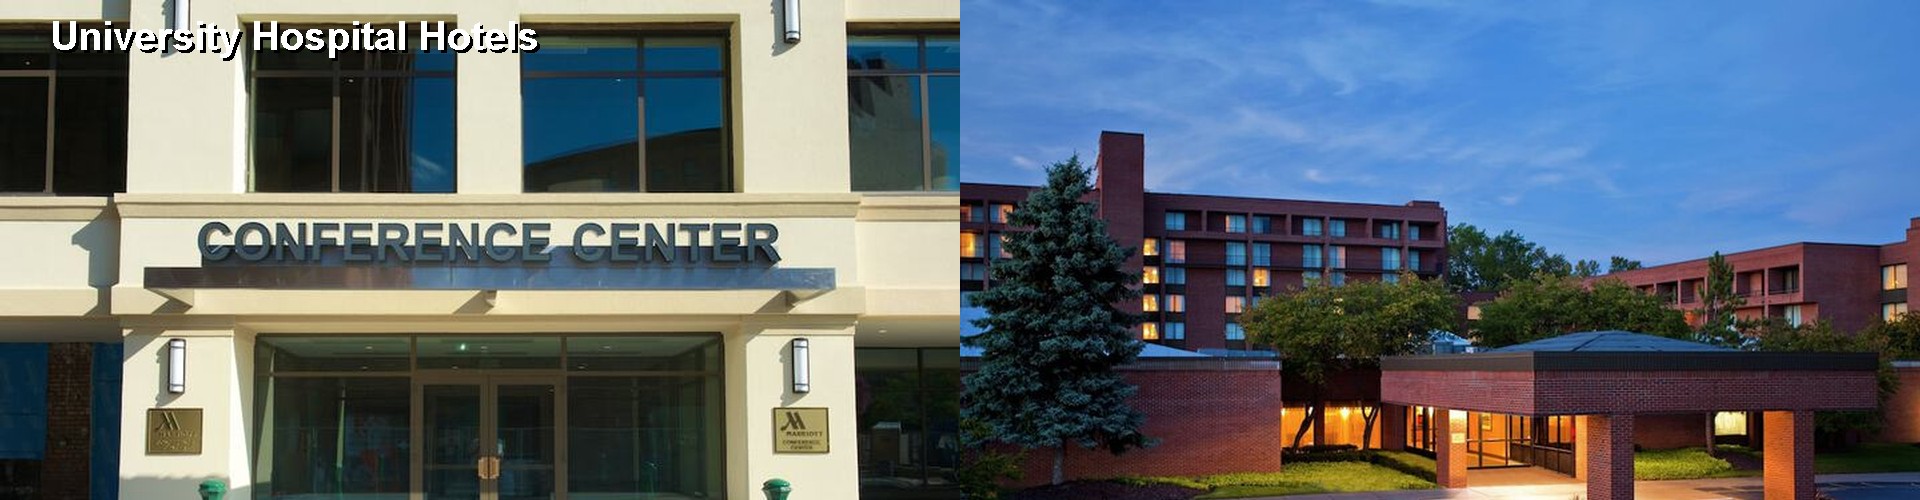 5 Best Hotels near University Hospital